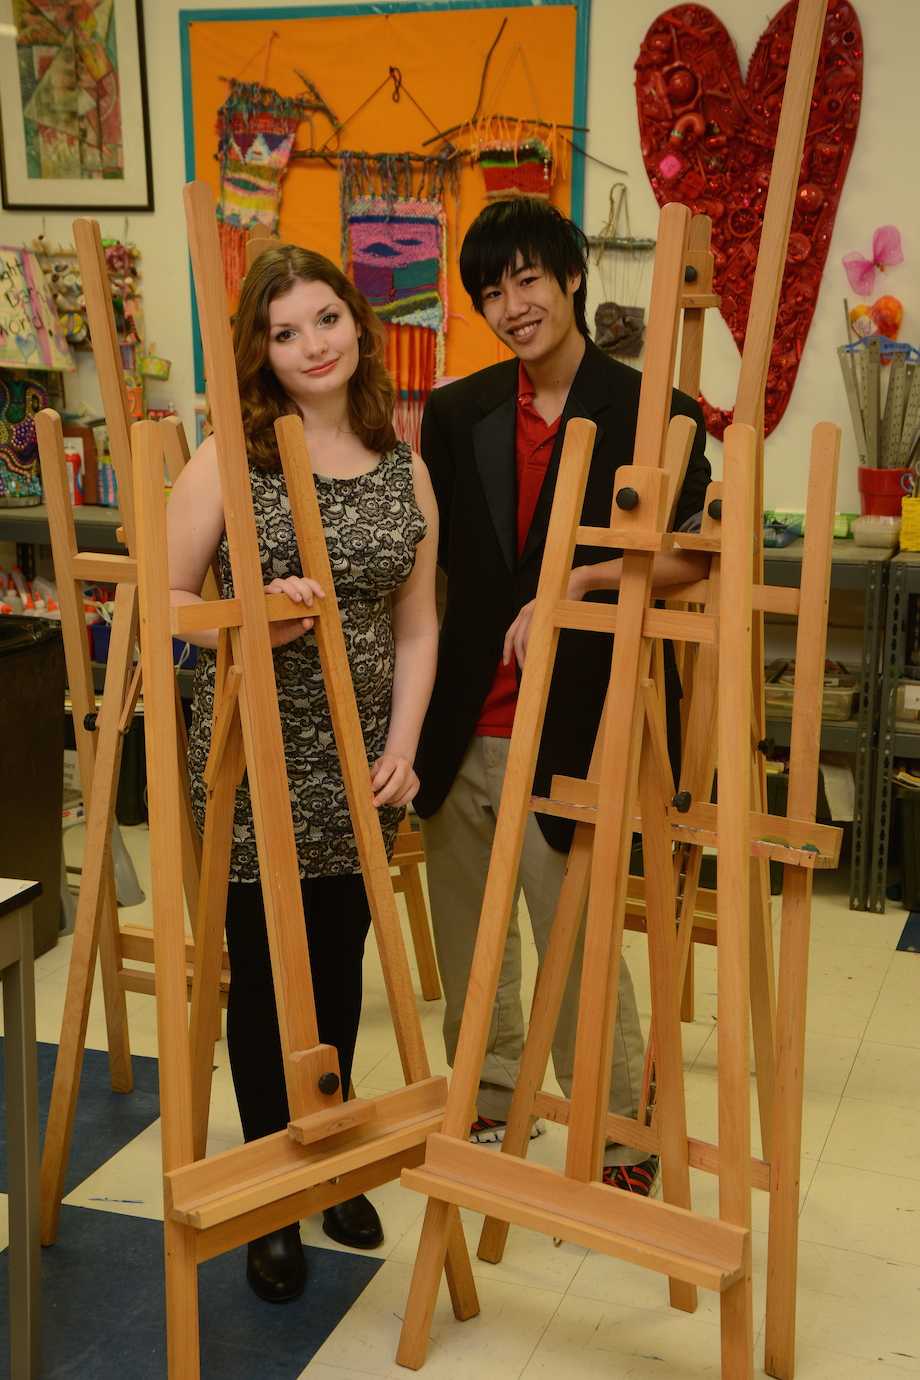 Most Artistic: Hanson Woo and Rebecca Garcia  (photo courtesy of Mr. Hubert Worley)